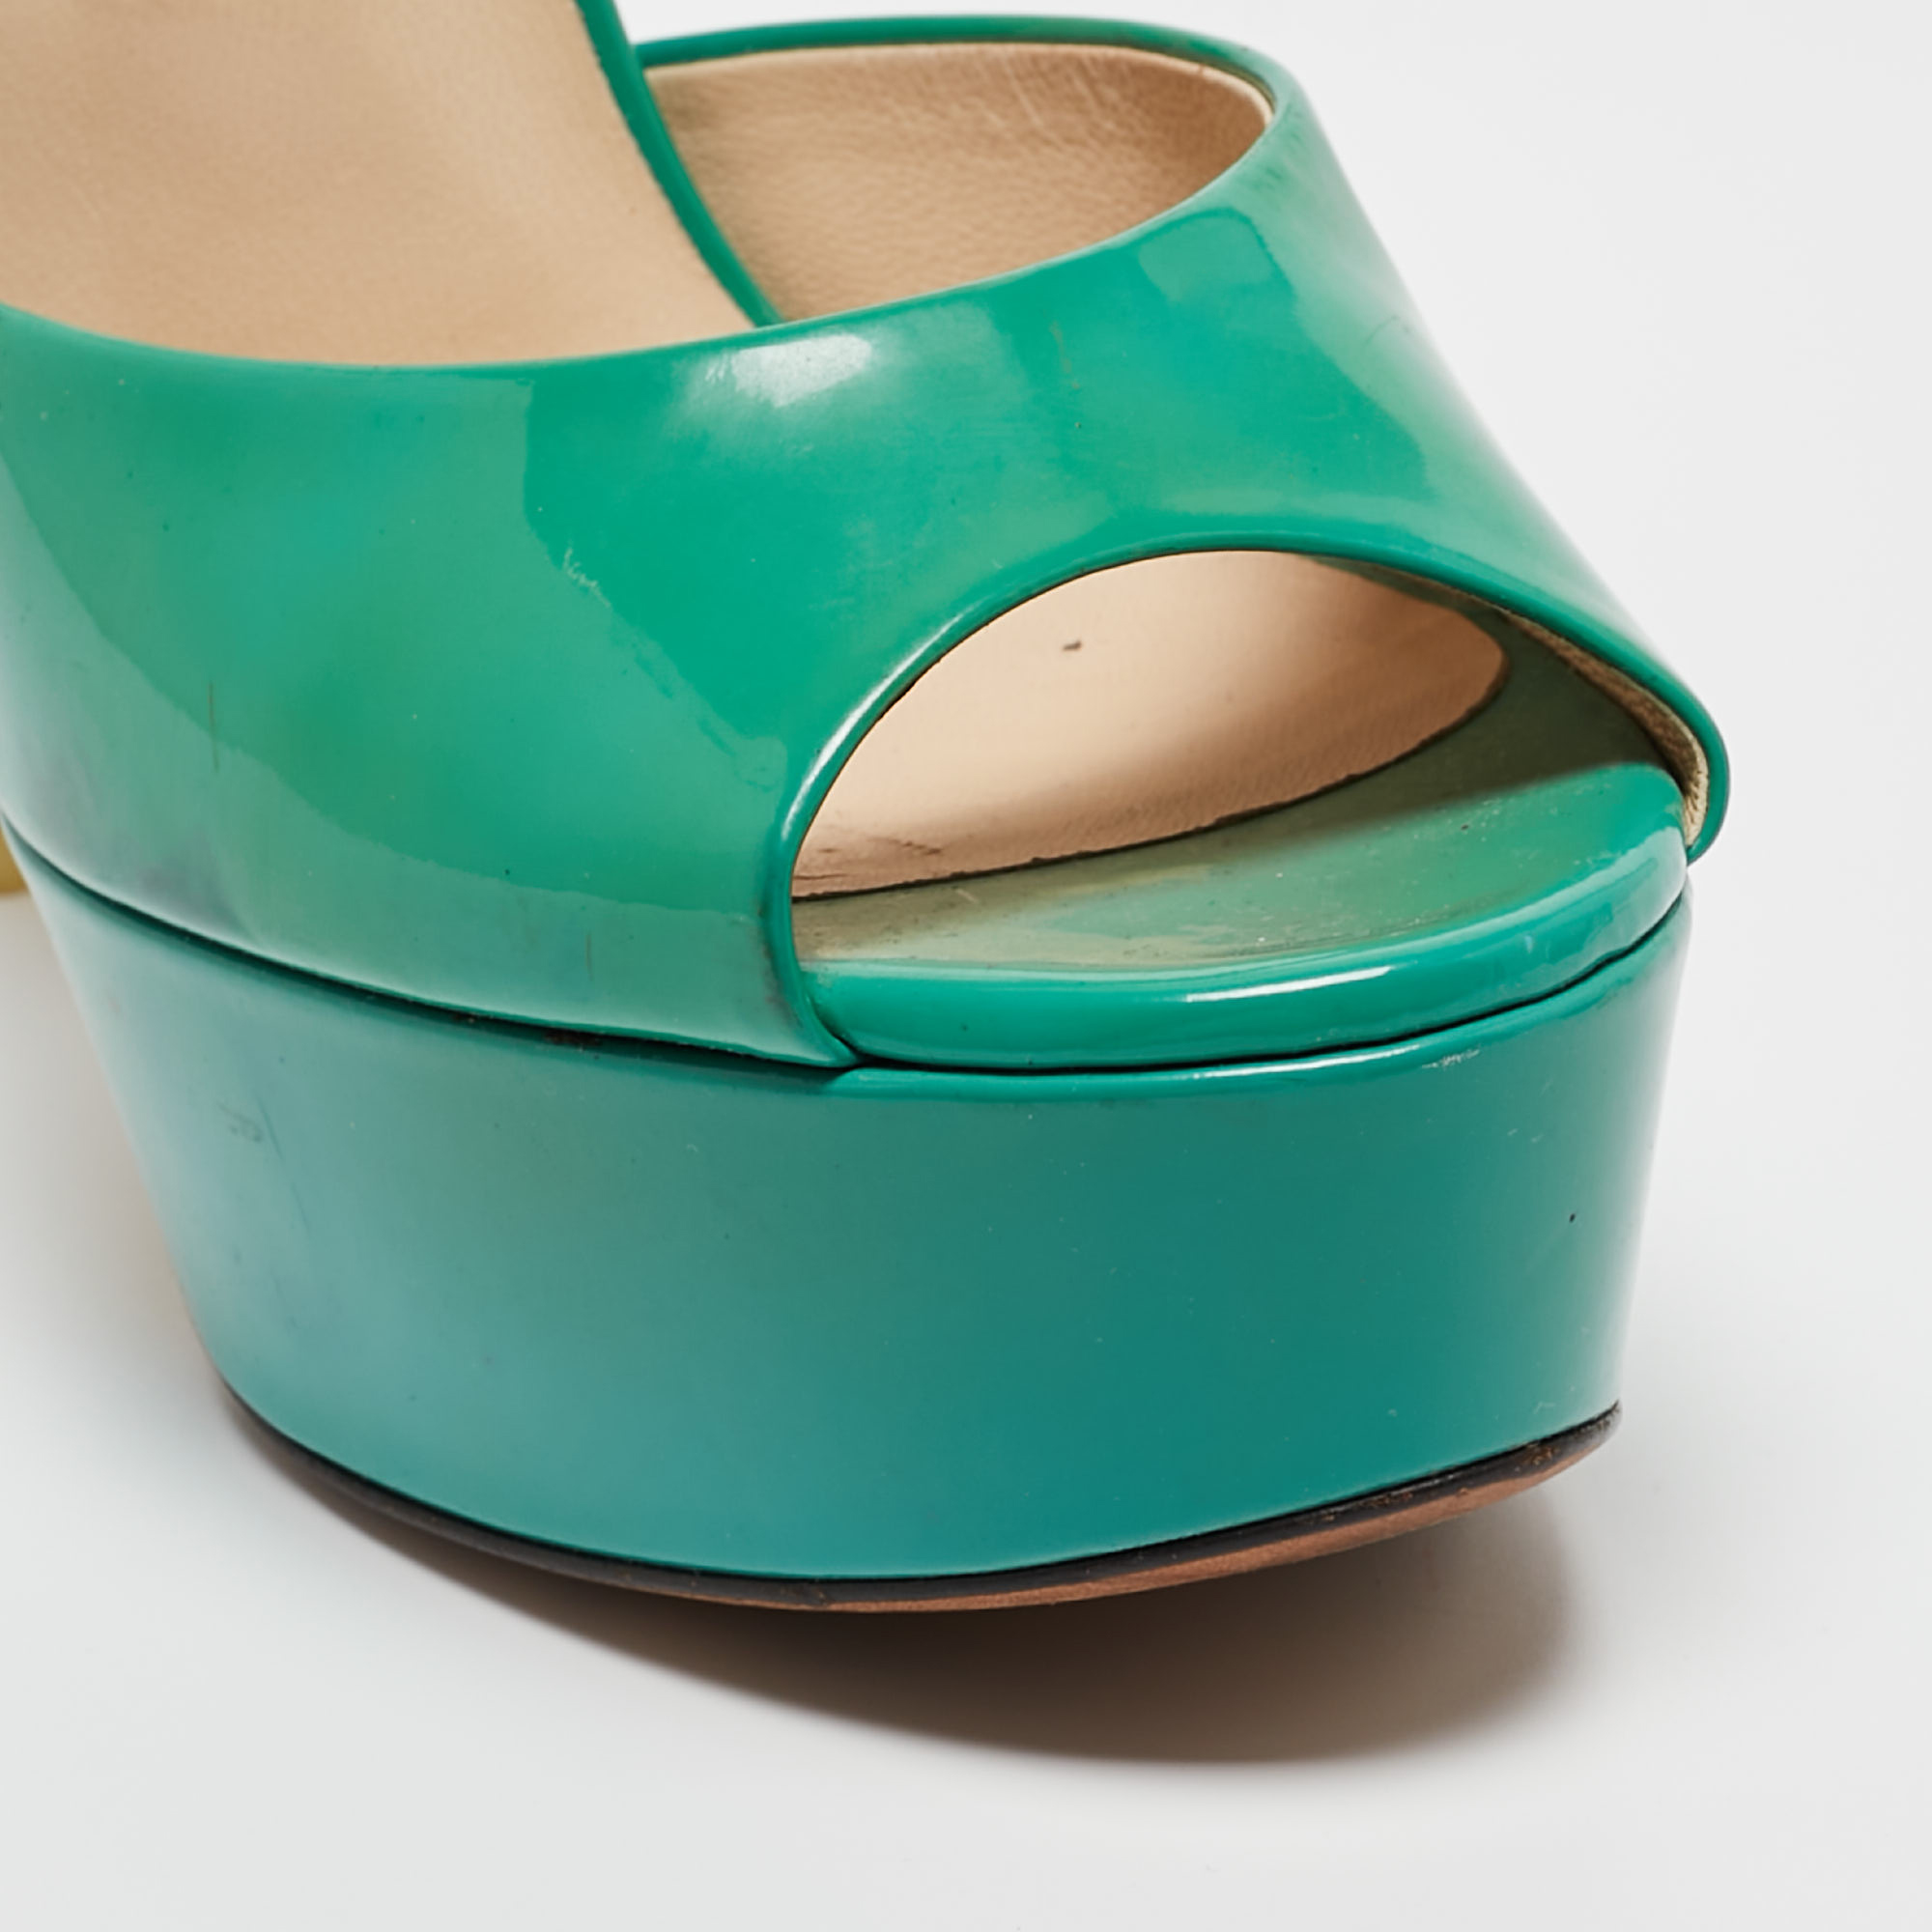 Jimmy Choo Green/Silver Leather Lolita Platform Sandals Size 38.5